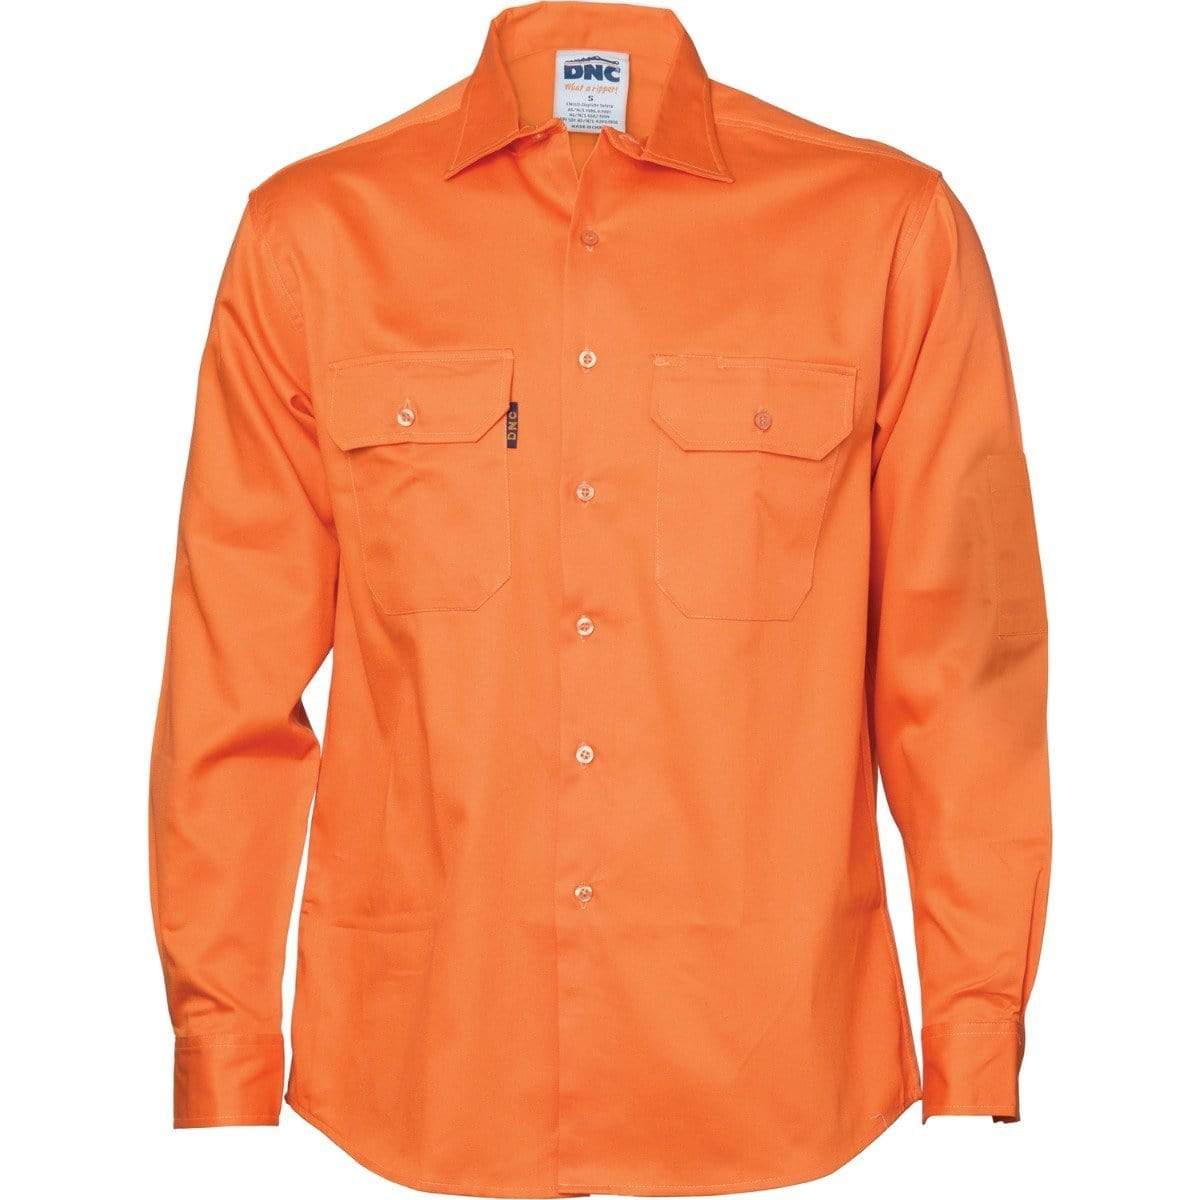 Dnc Workwear Cool-breeze Cotton Long Sleeve Work Shirt - 3208 Work Wear DNC Workwear Orange S 